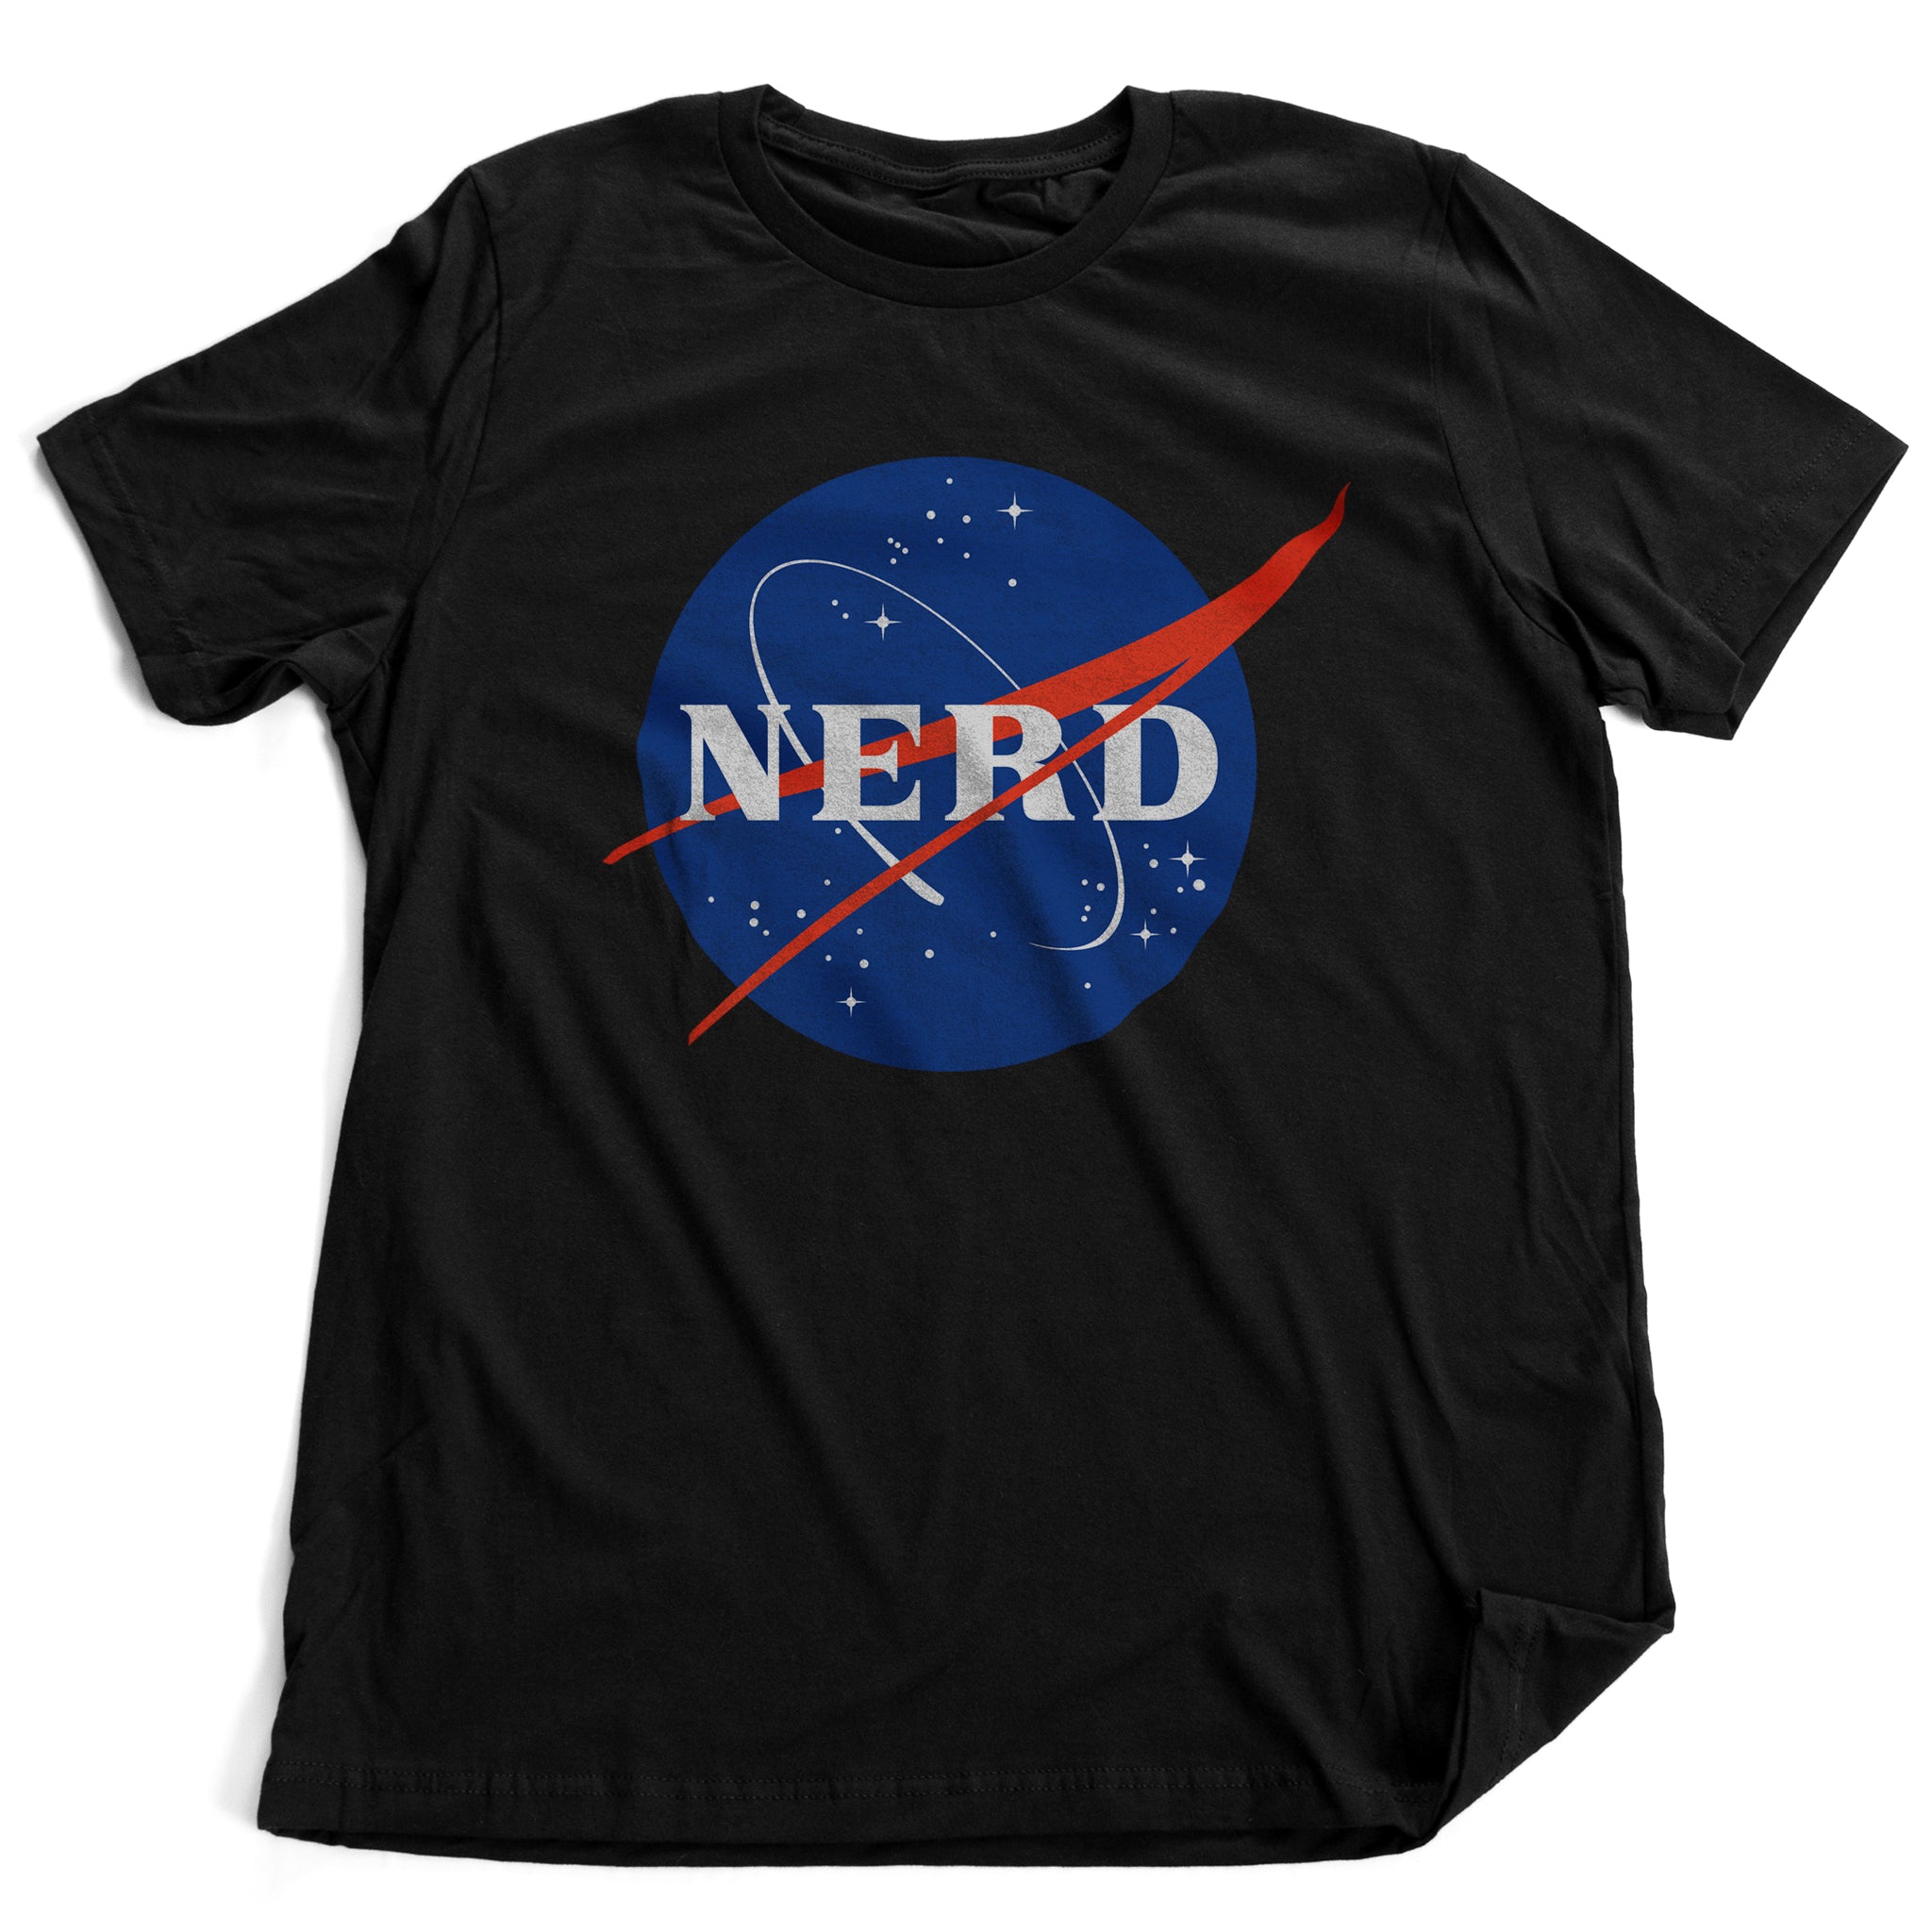 Unisex Lemon Short-Sleeve self-deprecating parody NERD T-Shirt – Machine NASA fun,